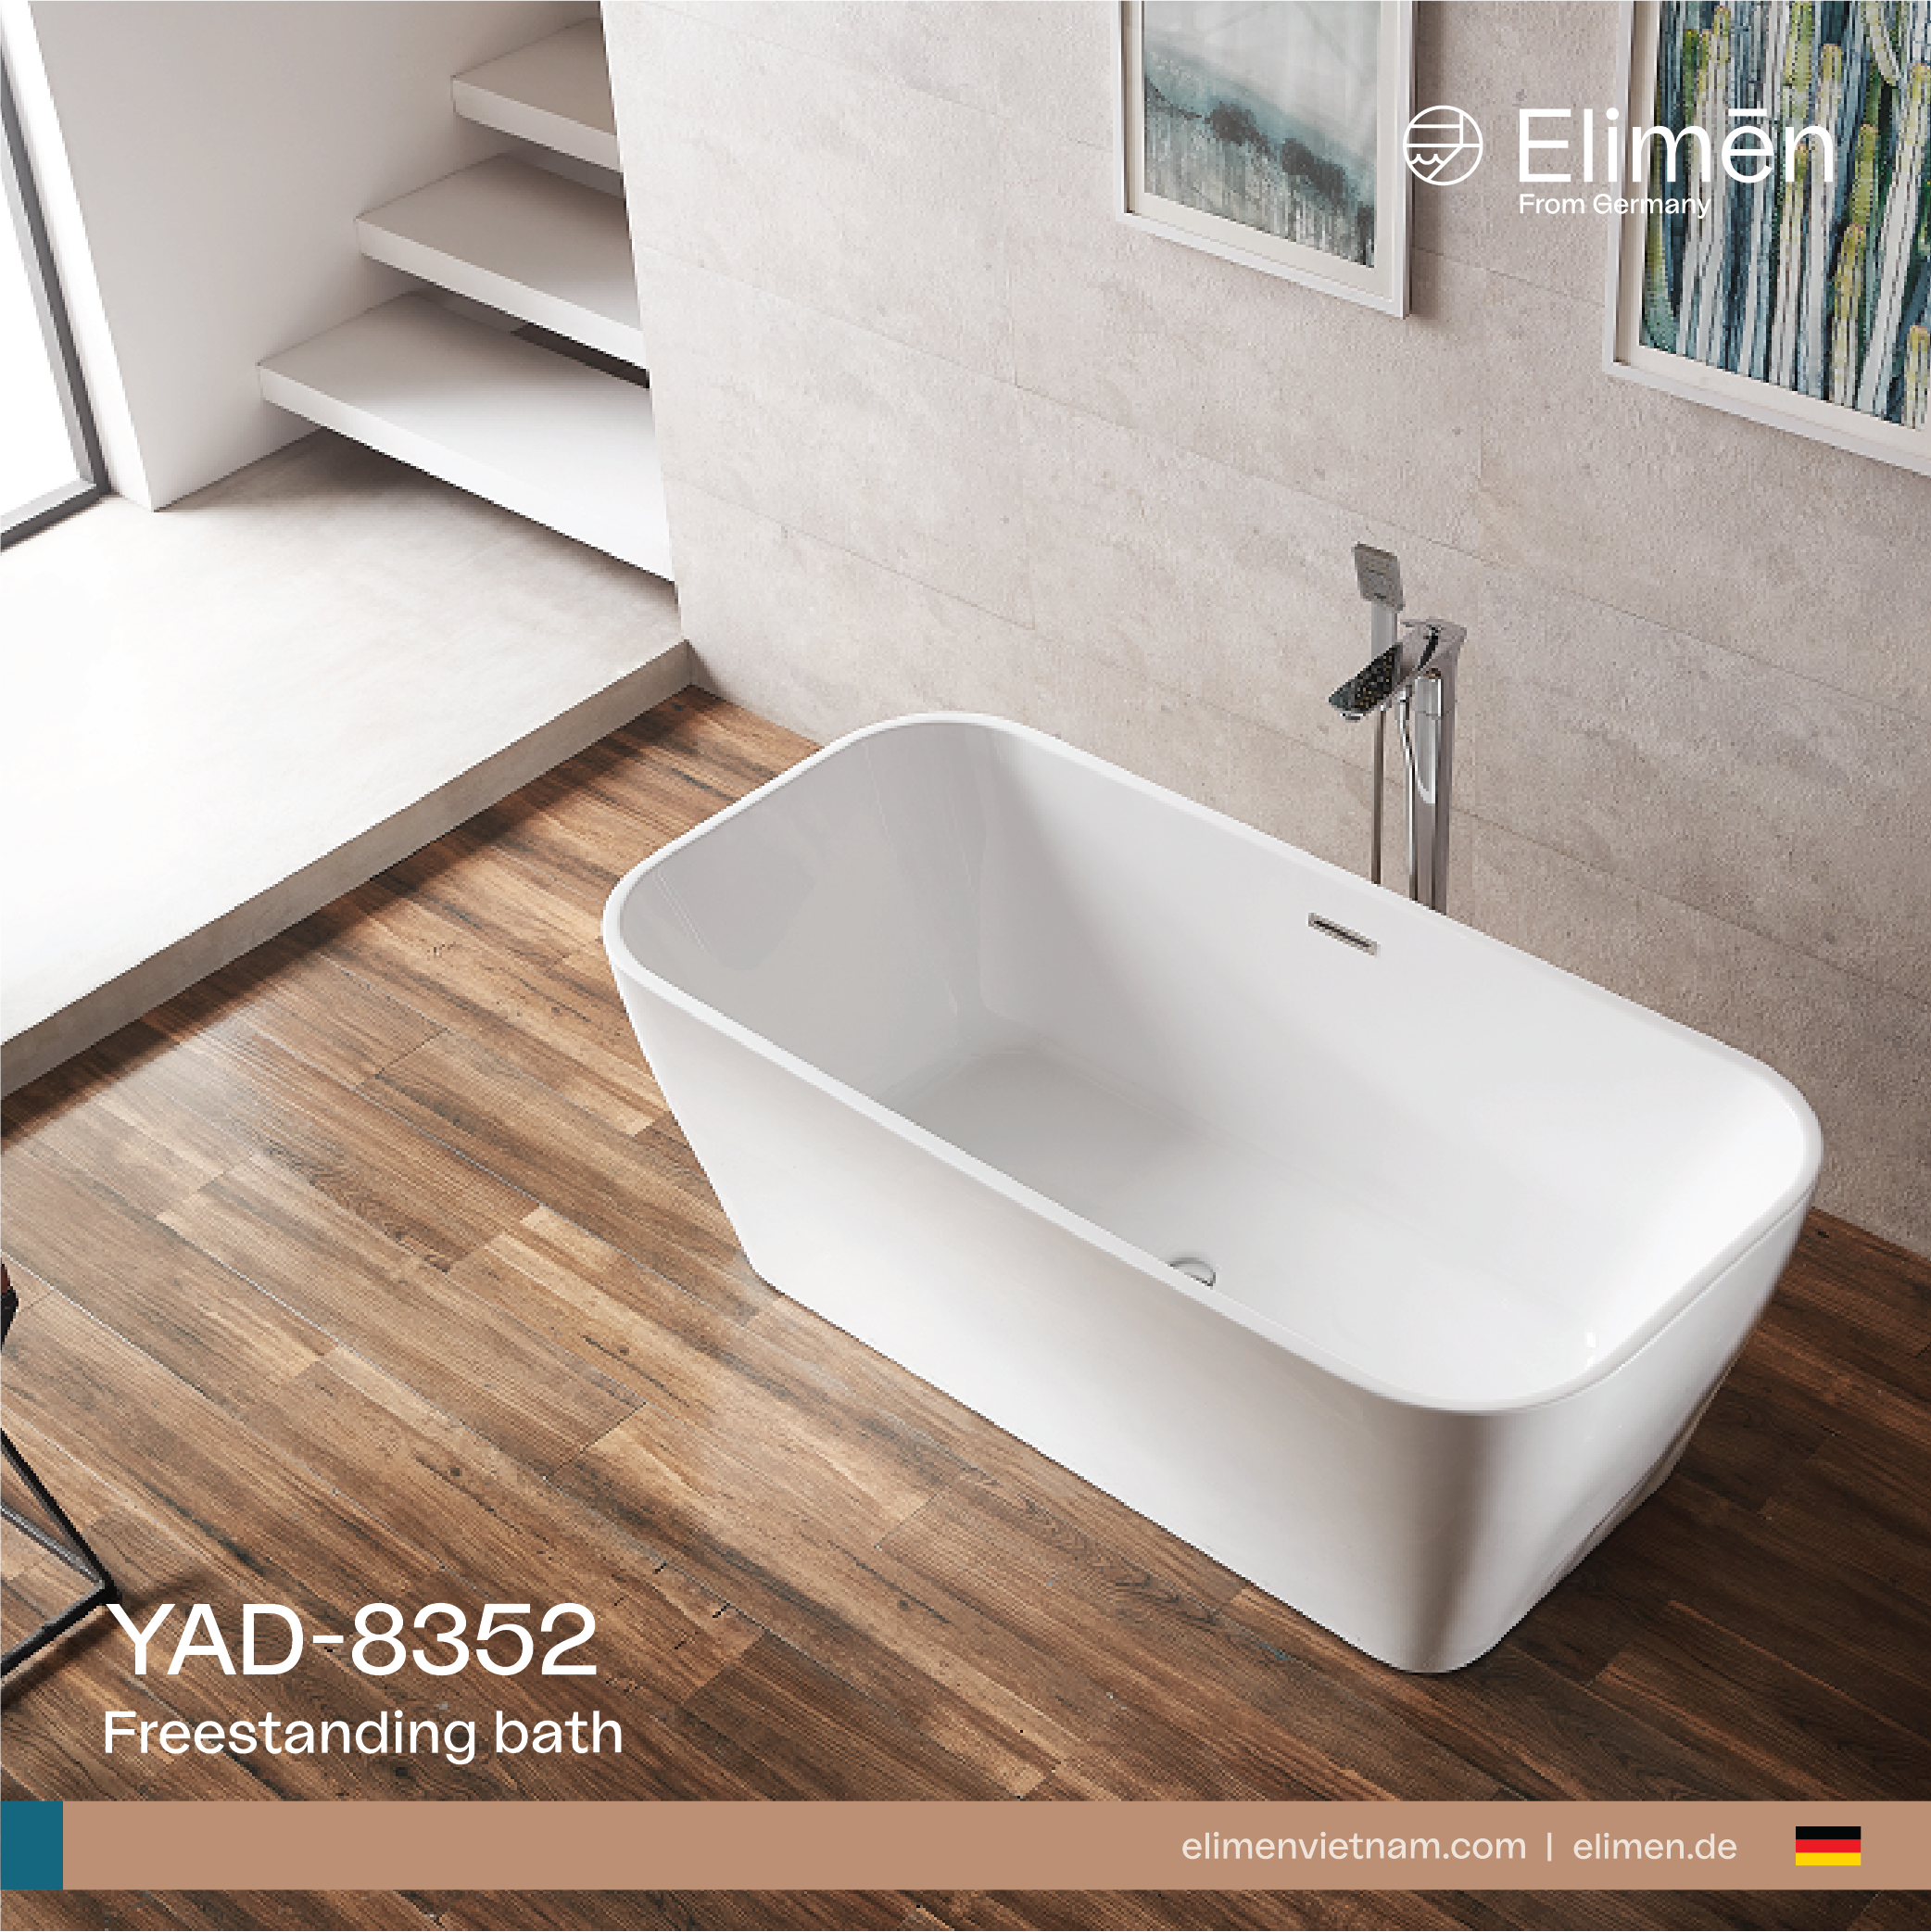 Elimen bathtub - Code YAD-8352-170 